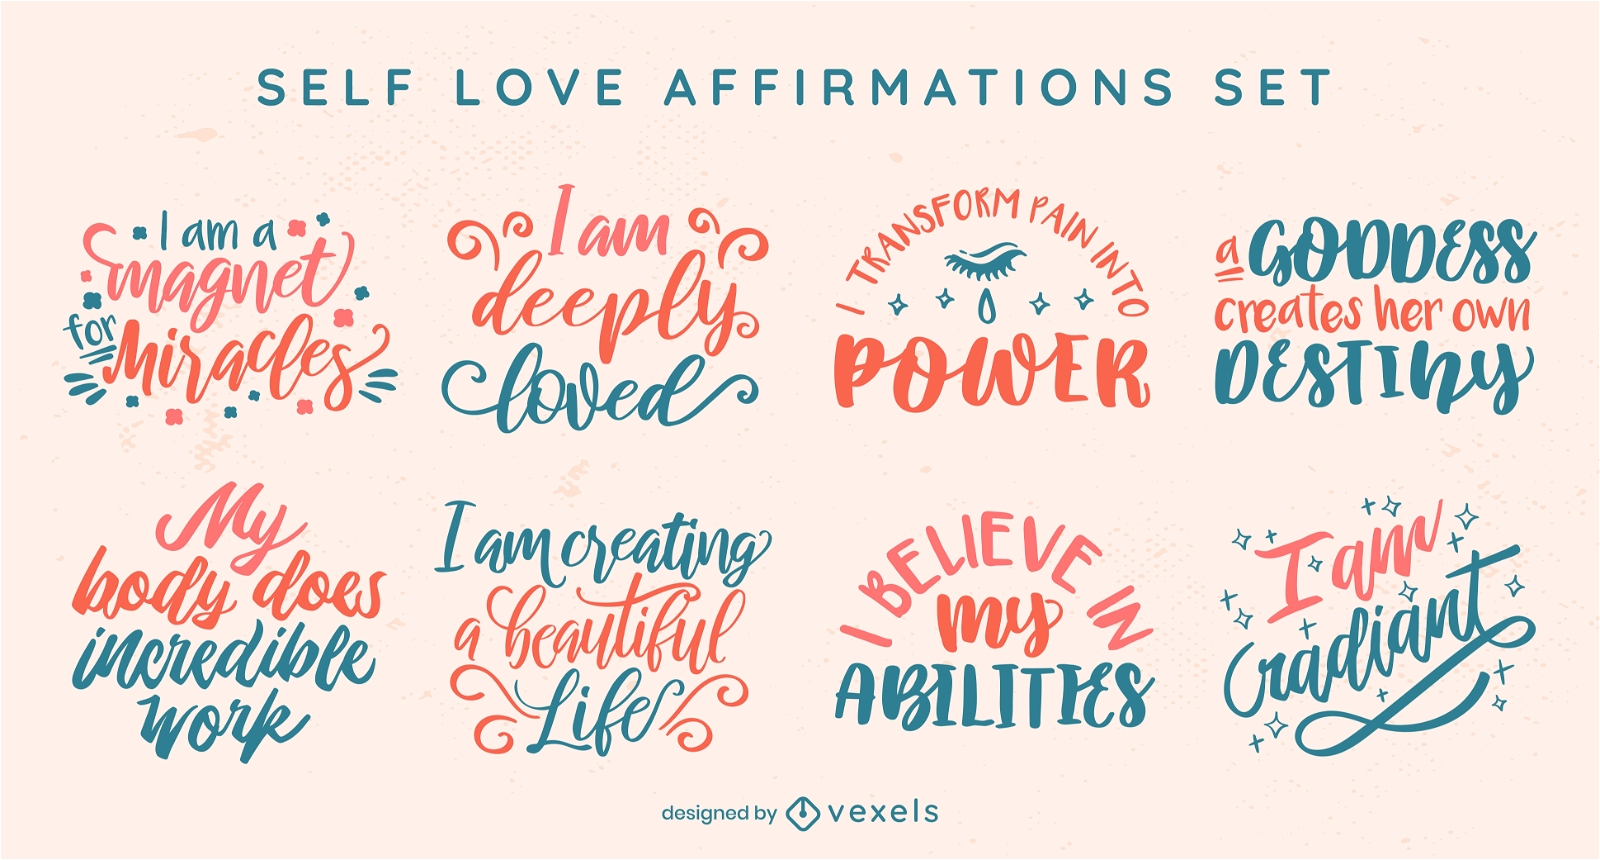 Self love affirmation quotes set